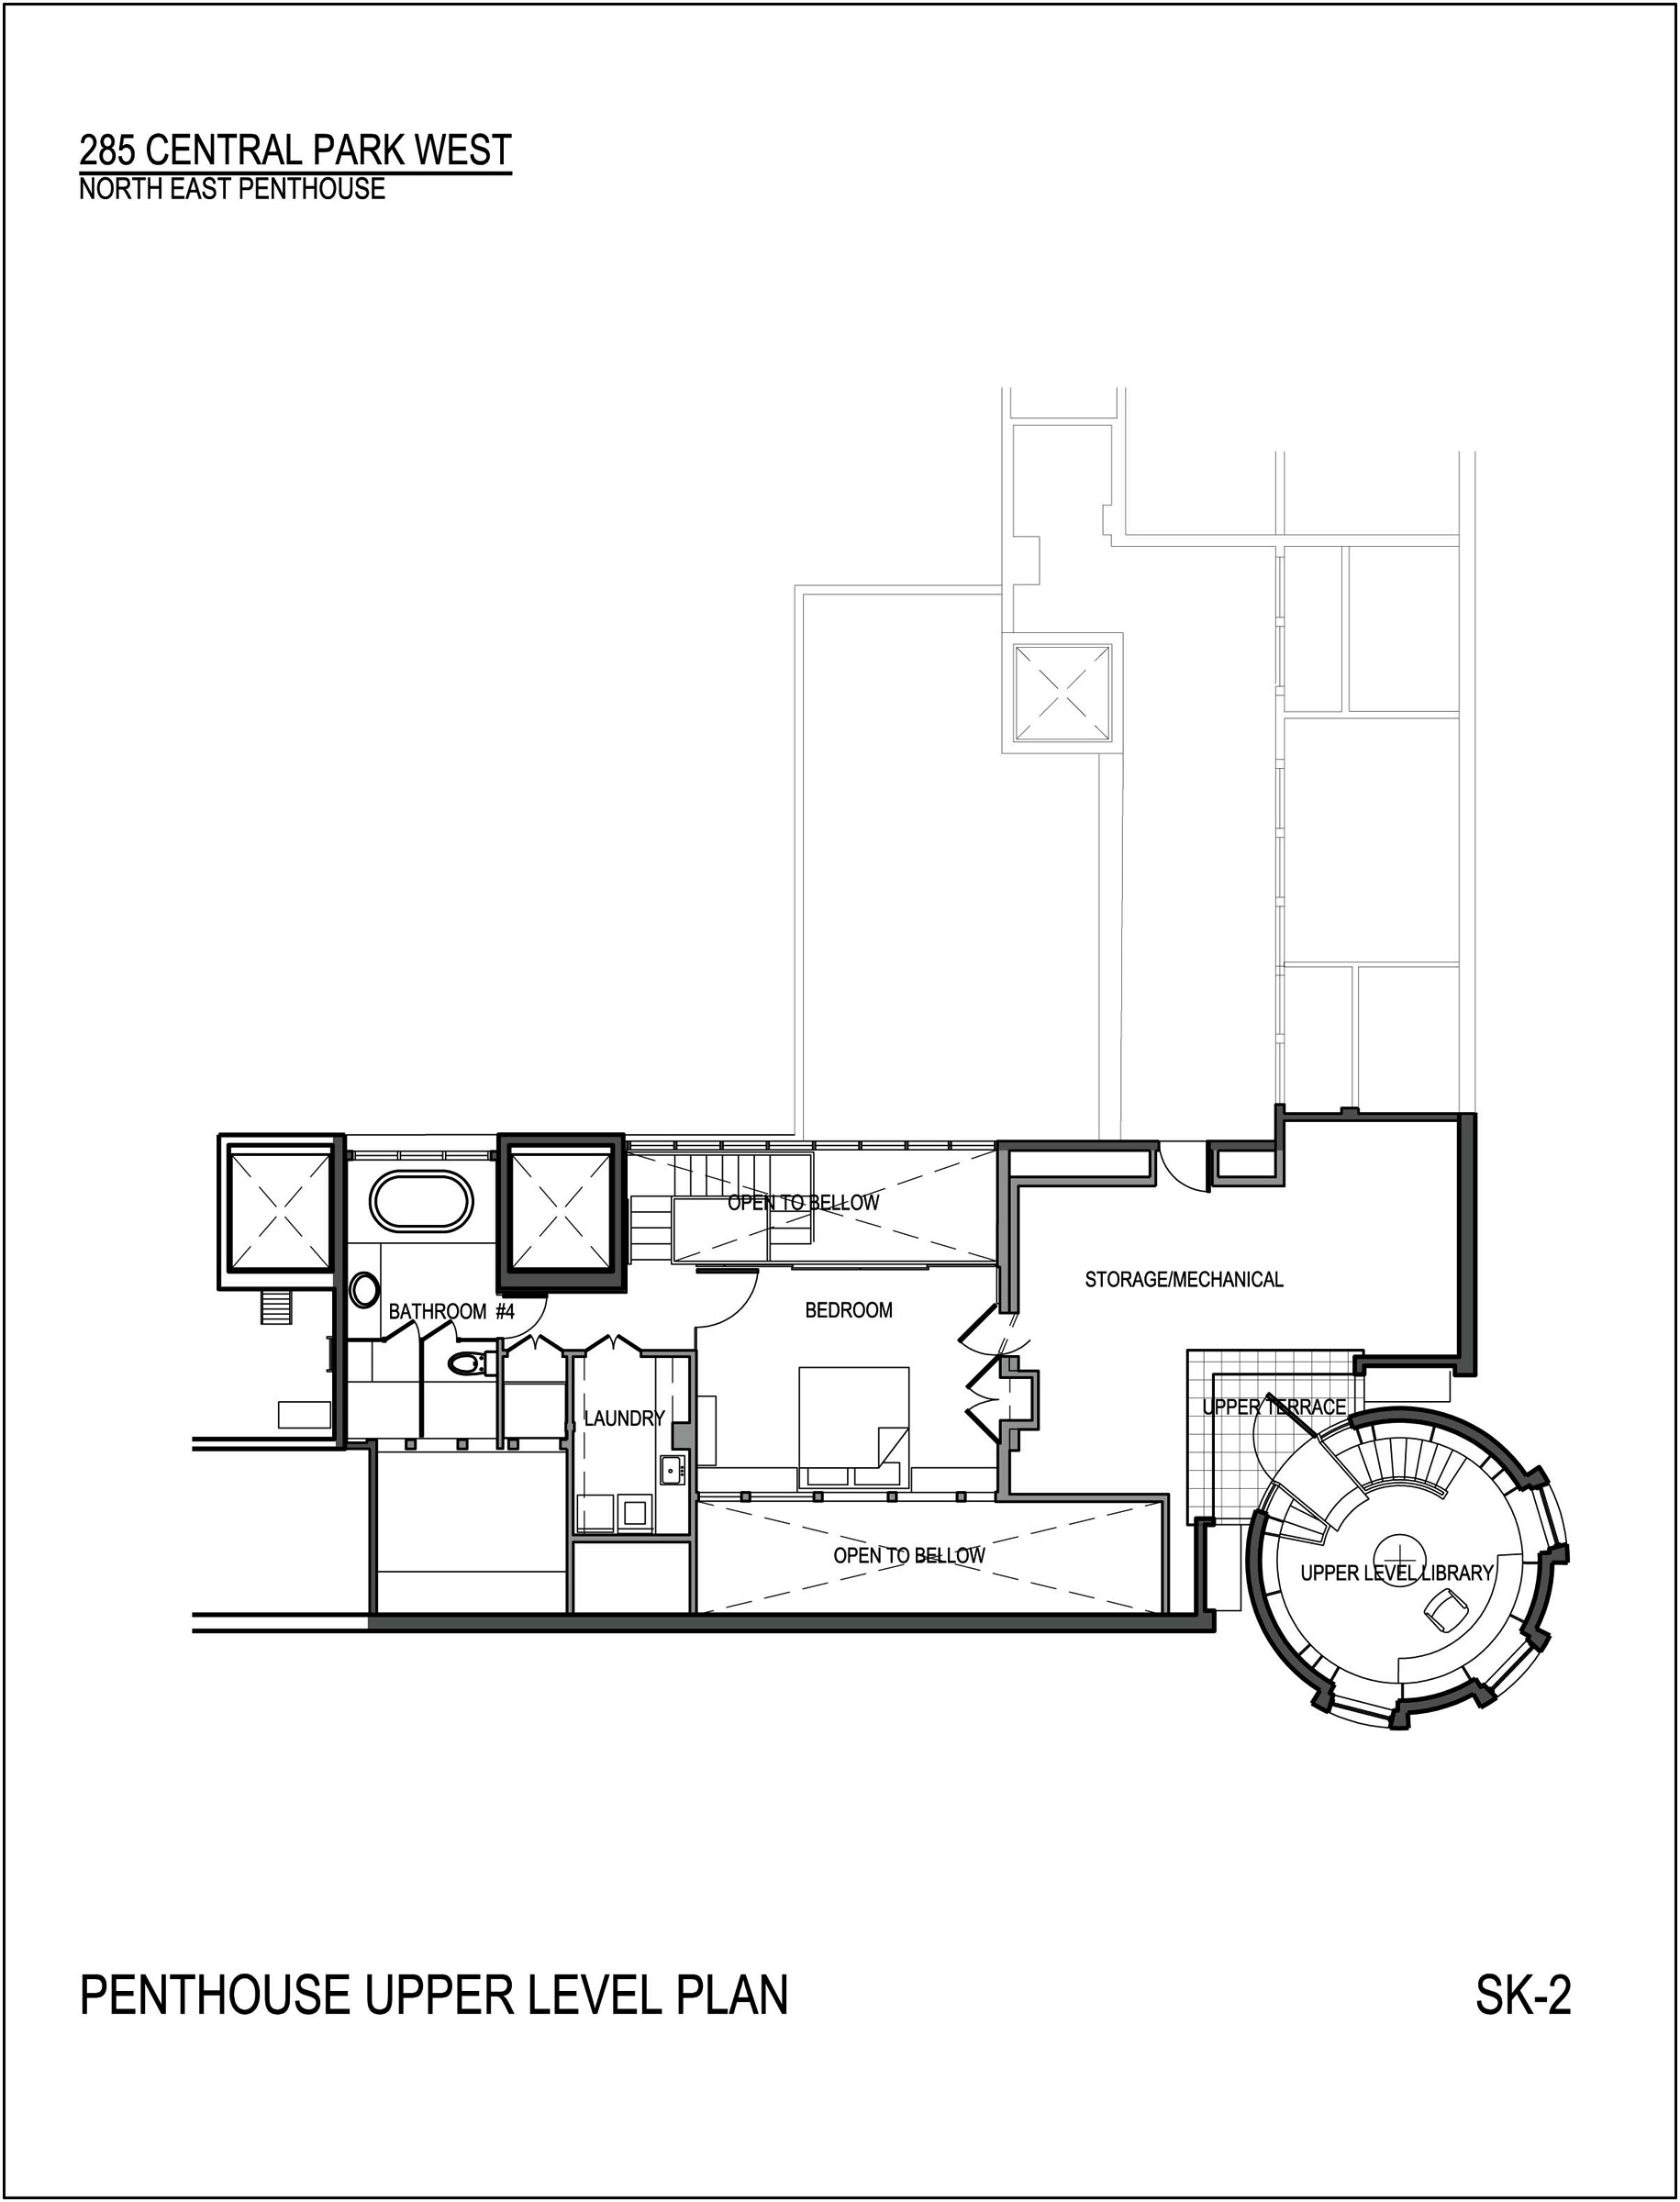 Penthouse Floor Plan sk-2.jpg